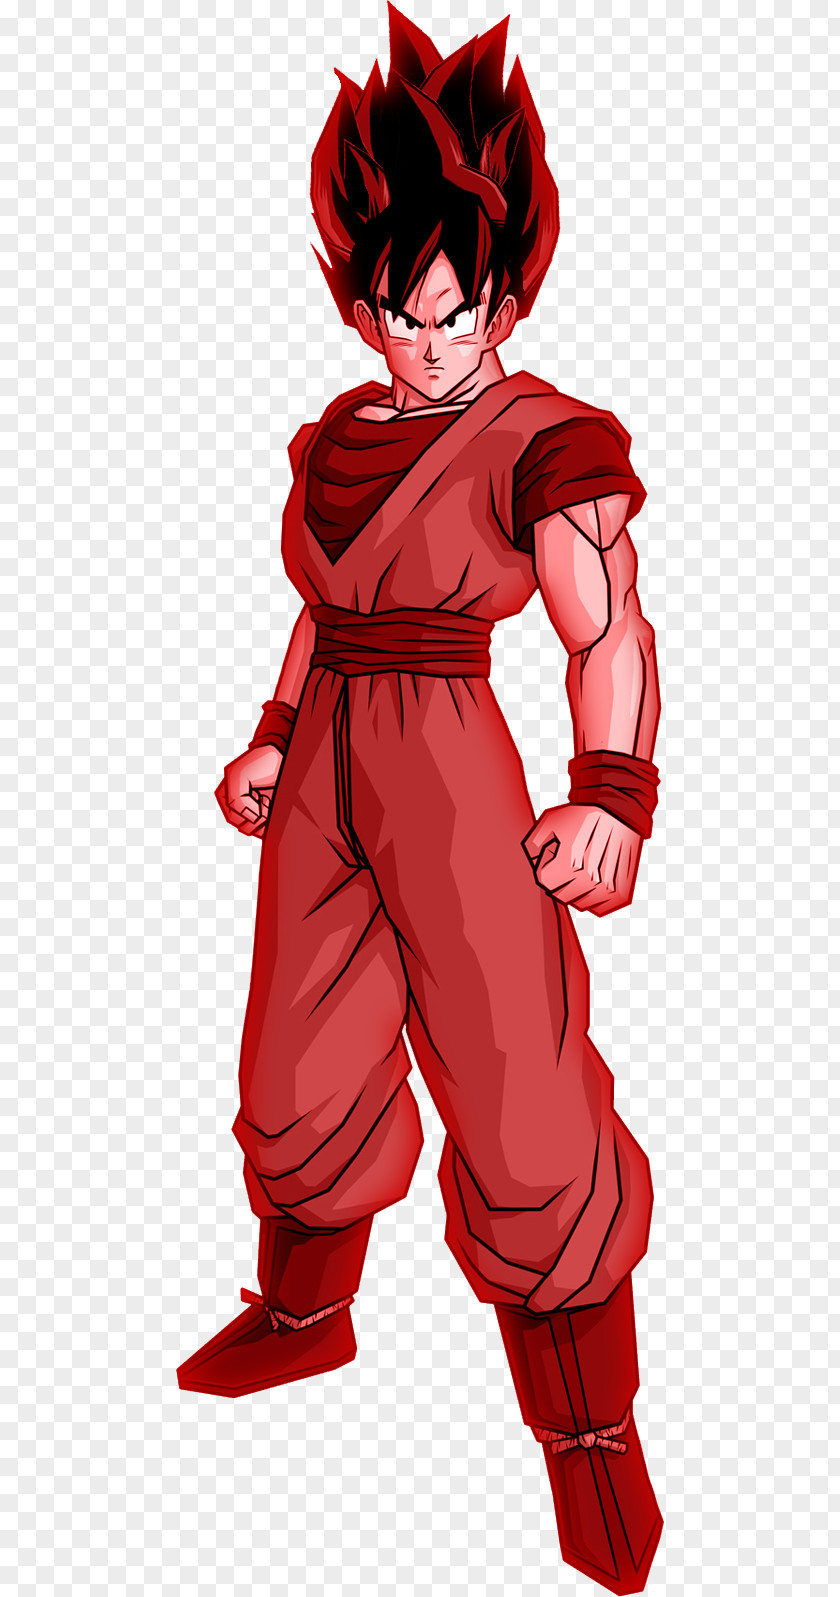 Goku Captain Ginyu Vegeta Frieza Dragon Ball PNG